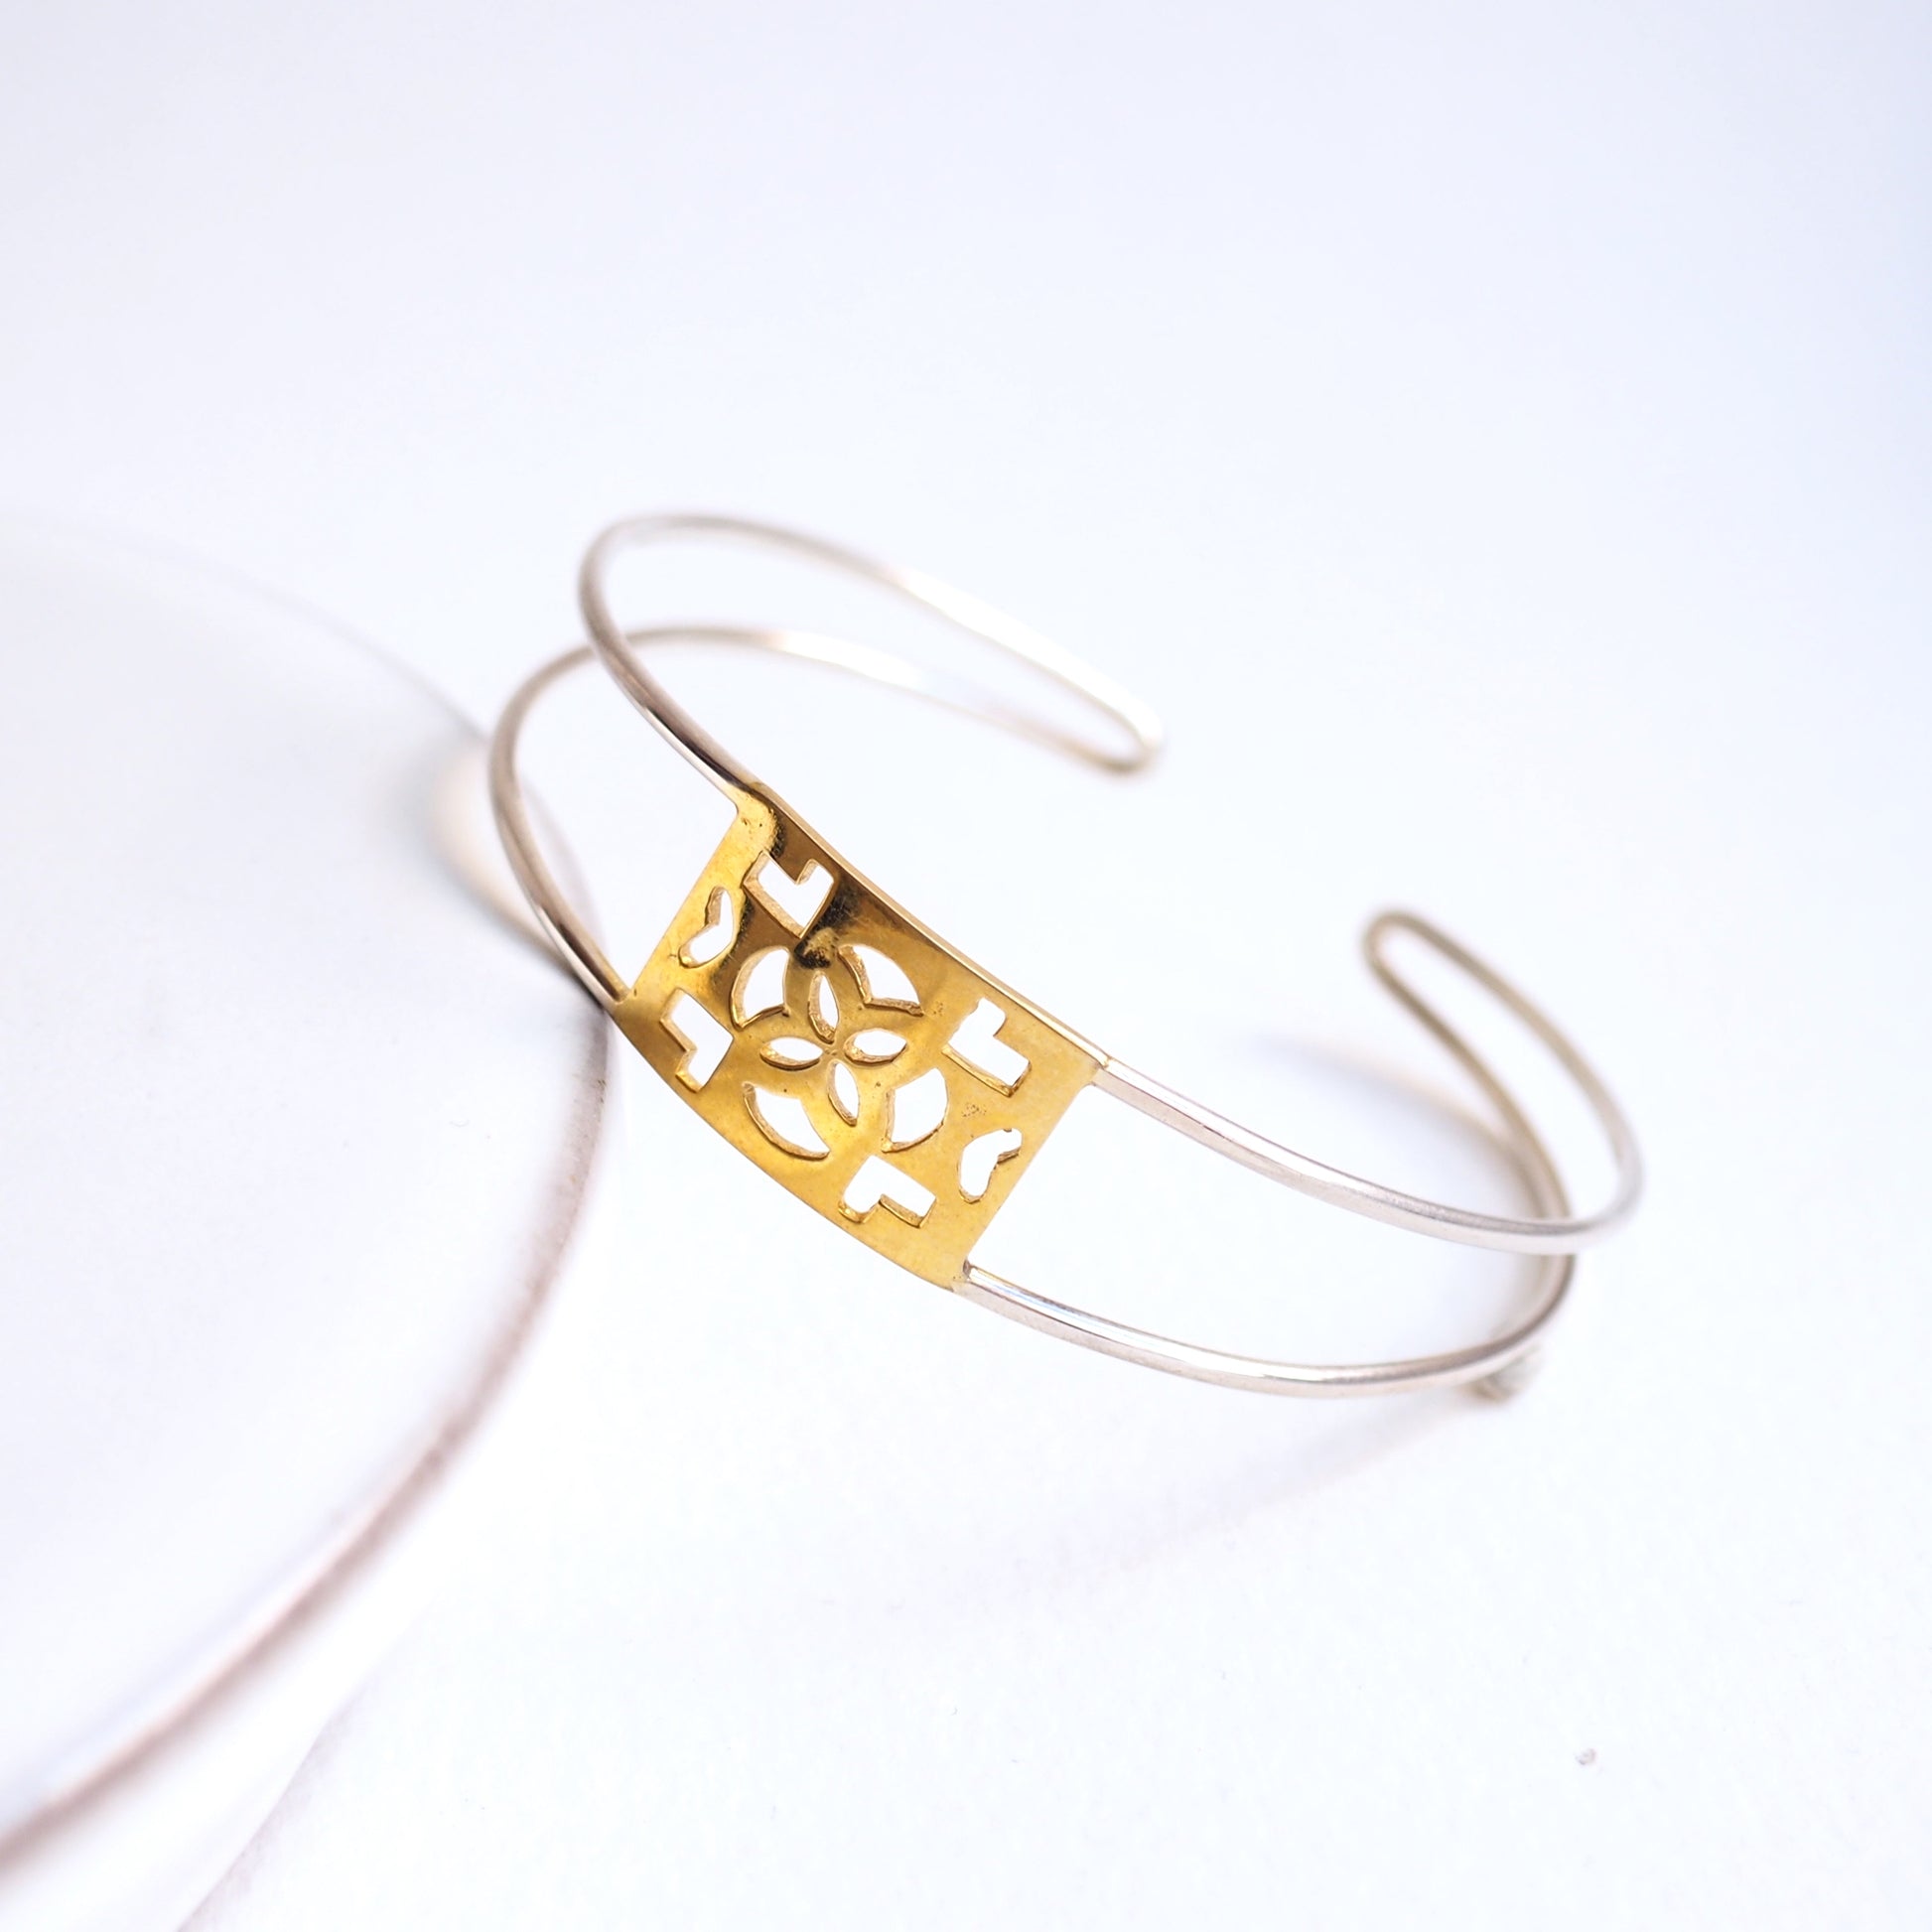 Azulejos Bracelet jewellery jewelry ring silver gold handmade handcrafted fashion custom bespoke 